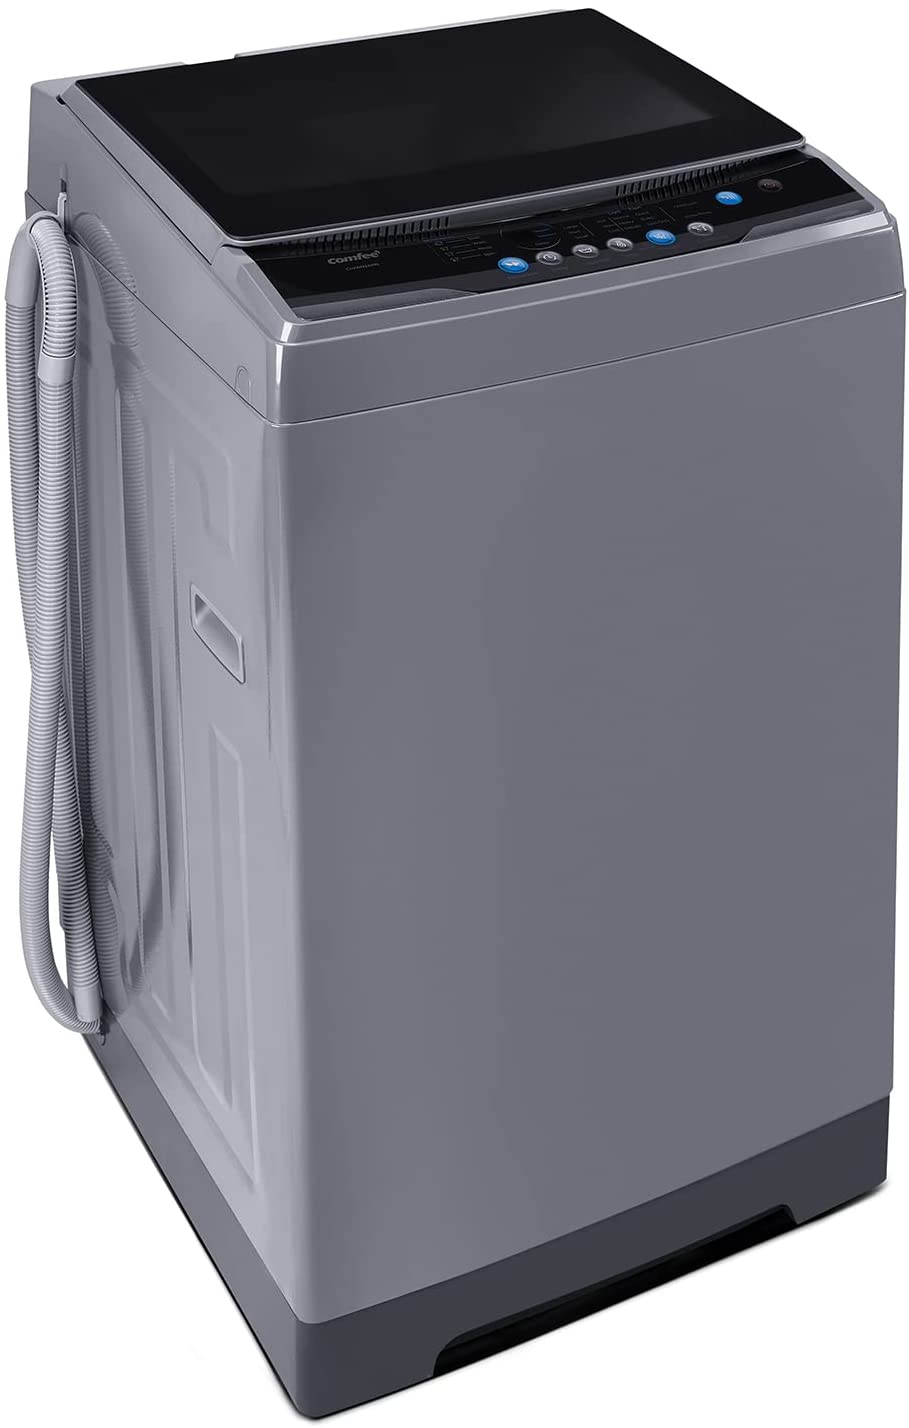 https://www.dontwasteyourmoney.com/wp-content/uploads/2022/05/comfee-1-6-cubic-feet-child-lock-portable-washing-machine-portable-washing-machines-for-apartments.jpg